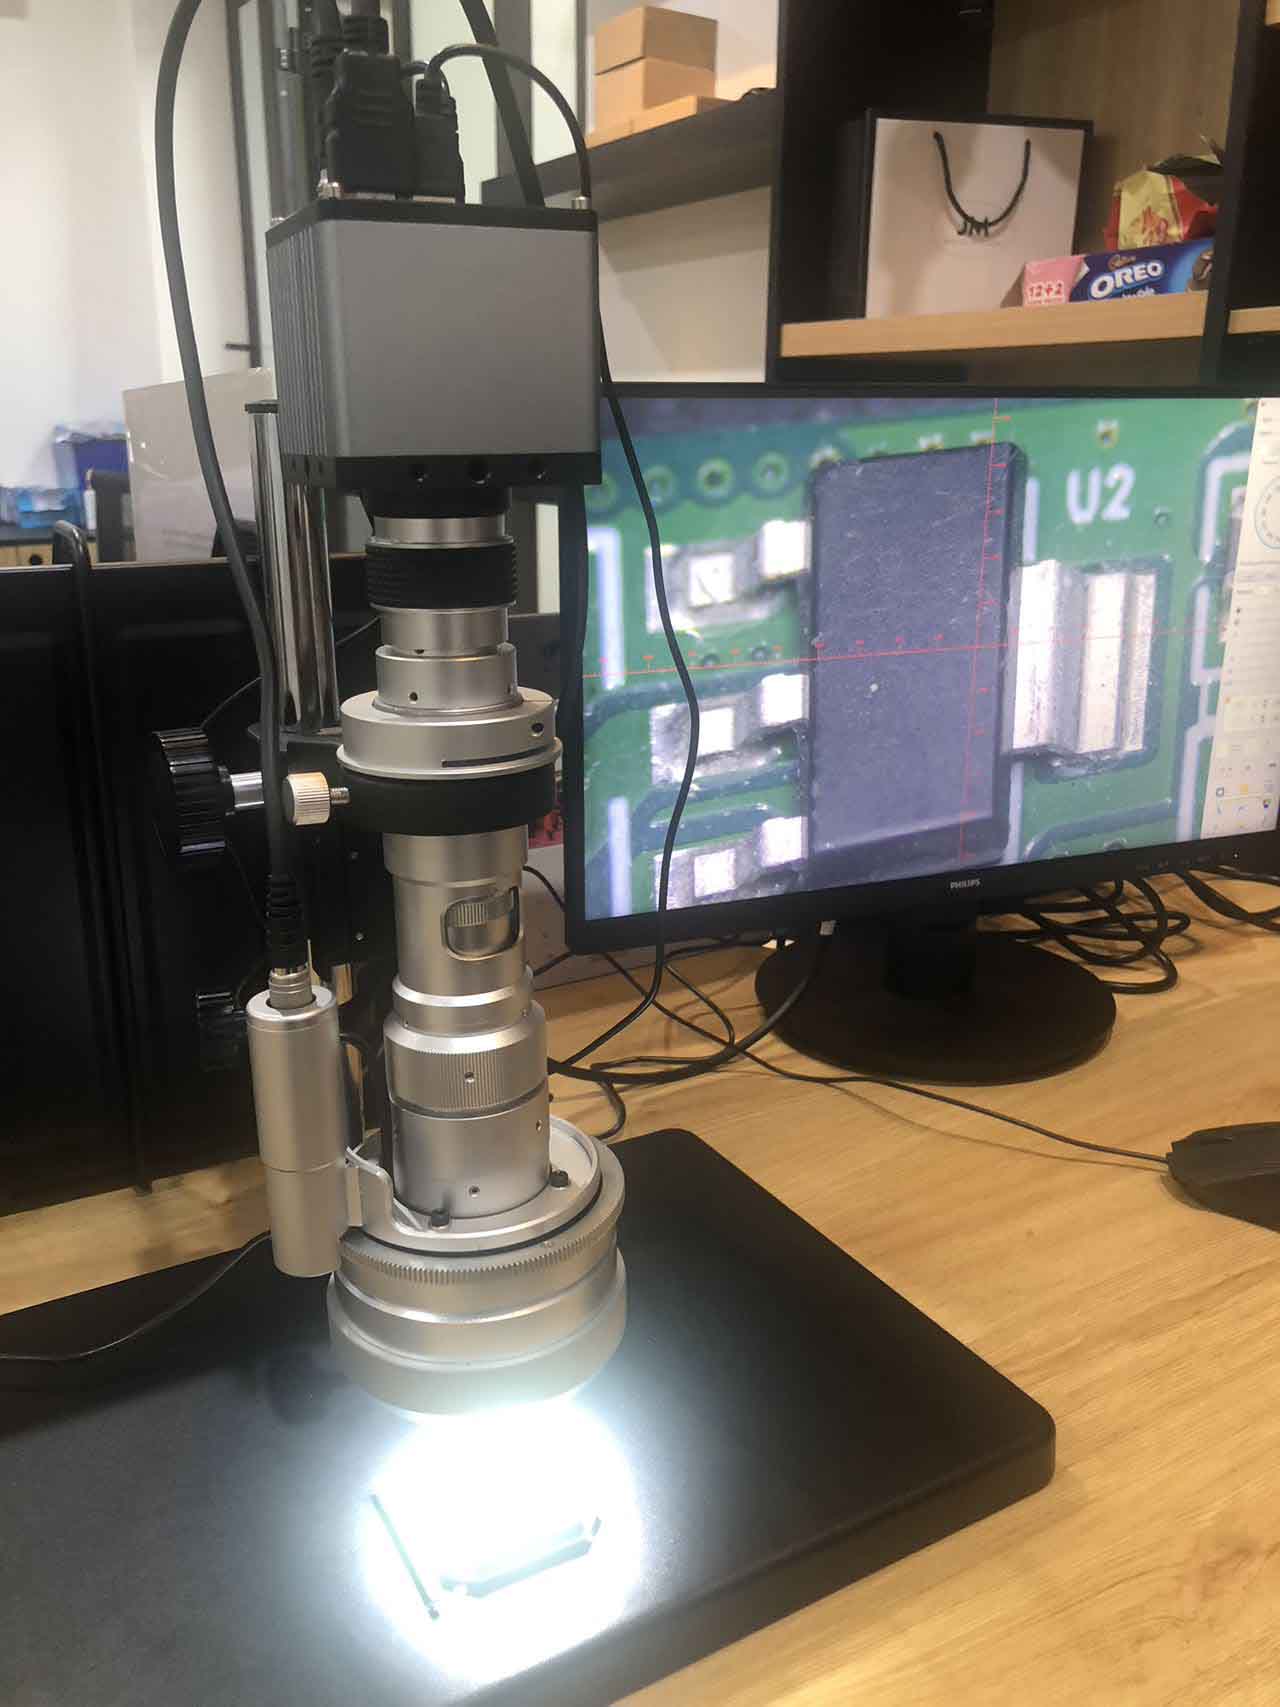 3d digital microscope